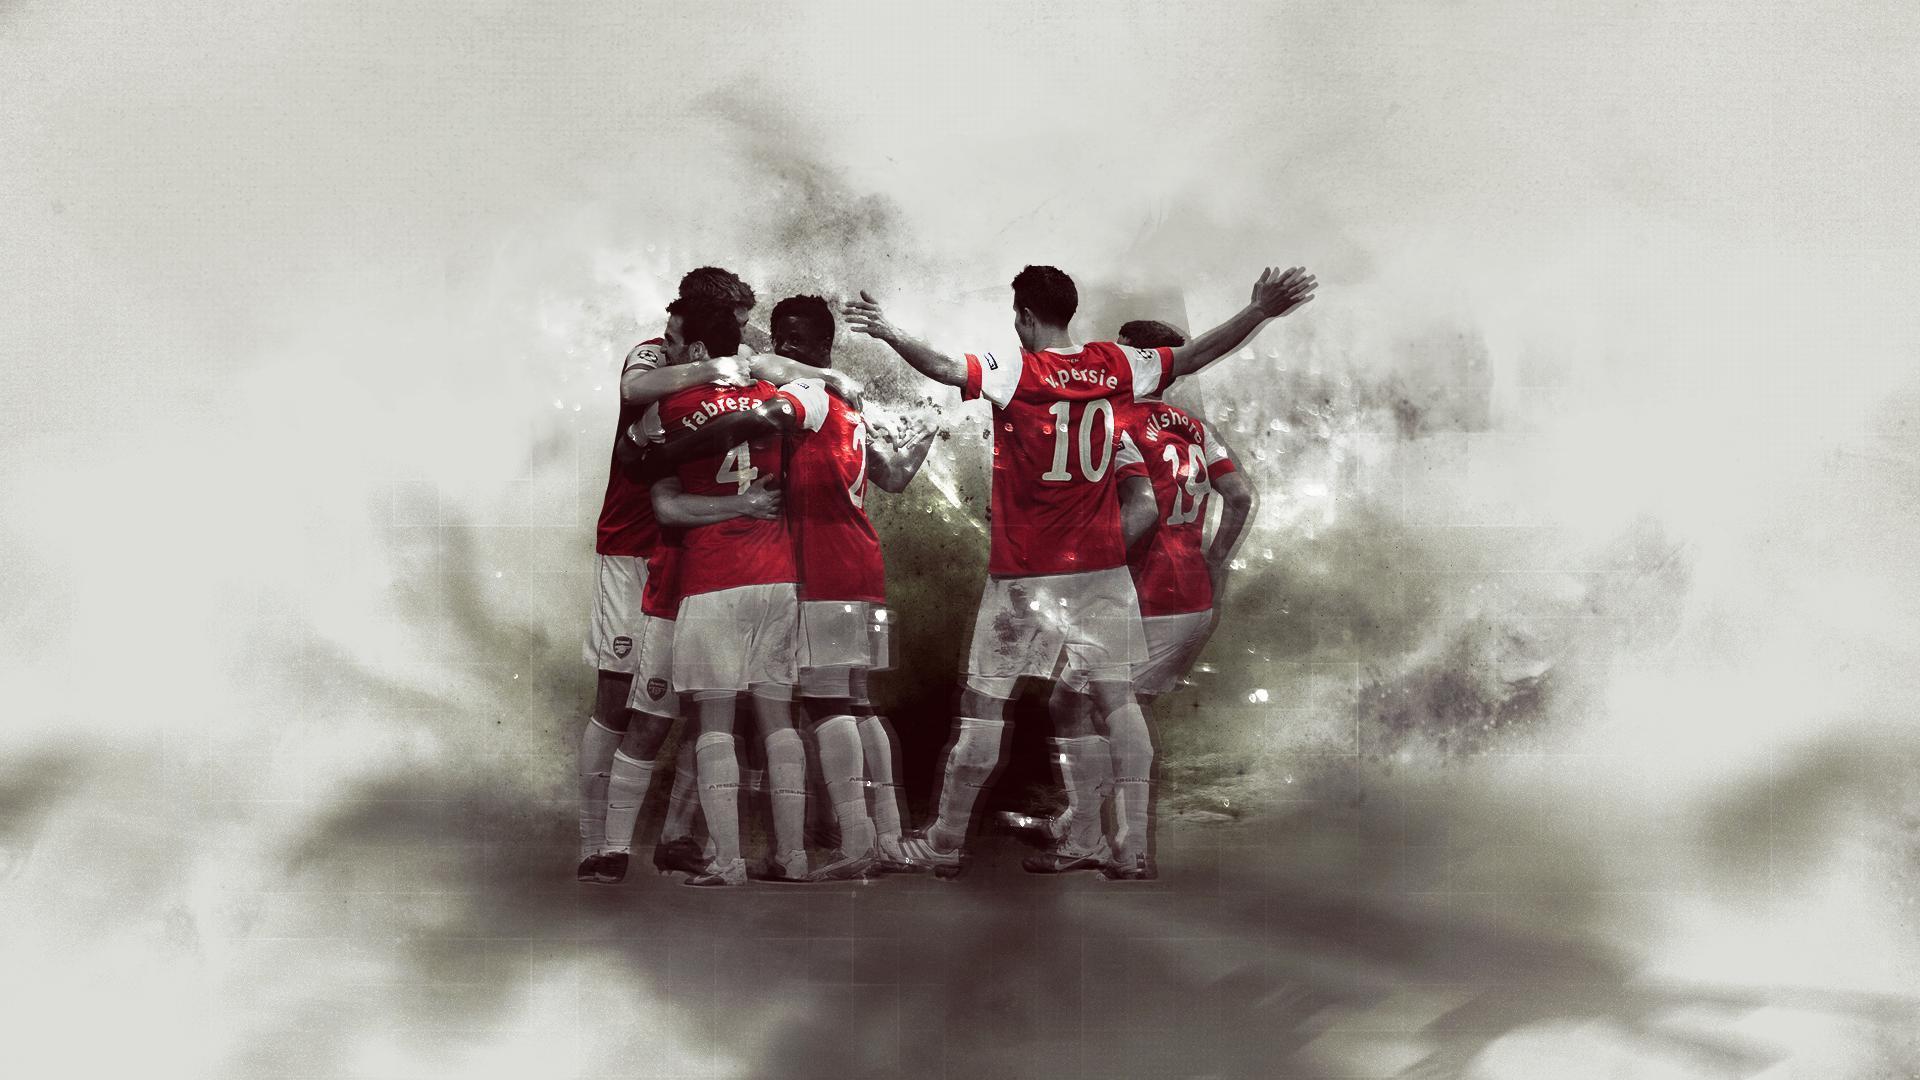 Asenal HD Wallpaper. Download Arsenal Picture